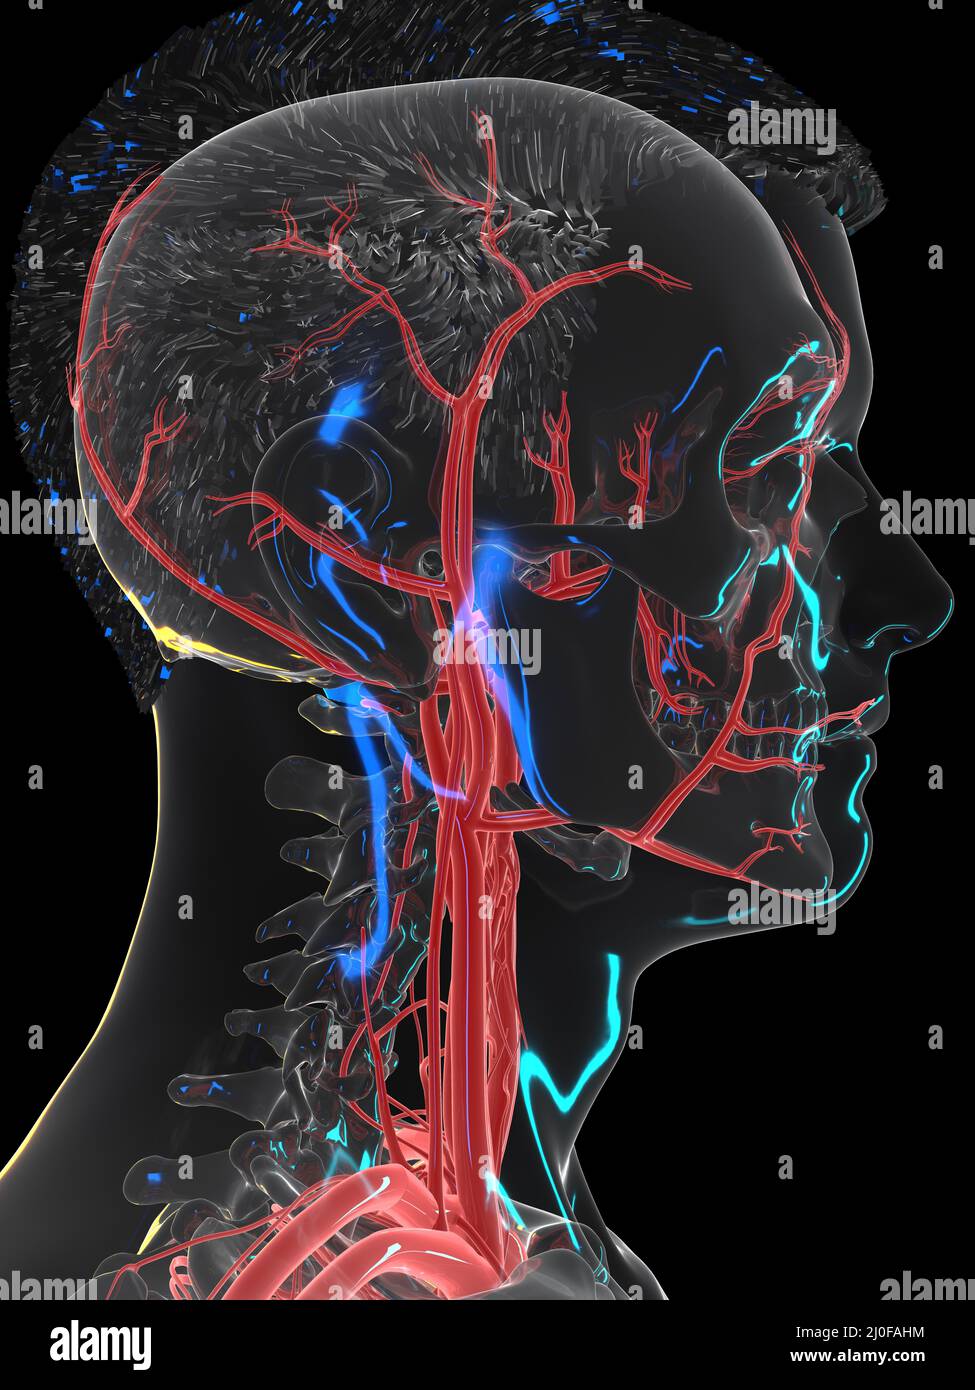 Vascular system of the head, illustration Stock Photo